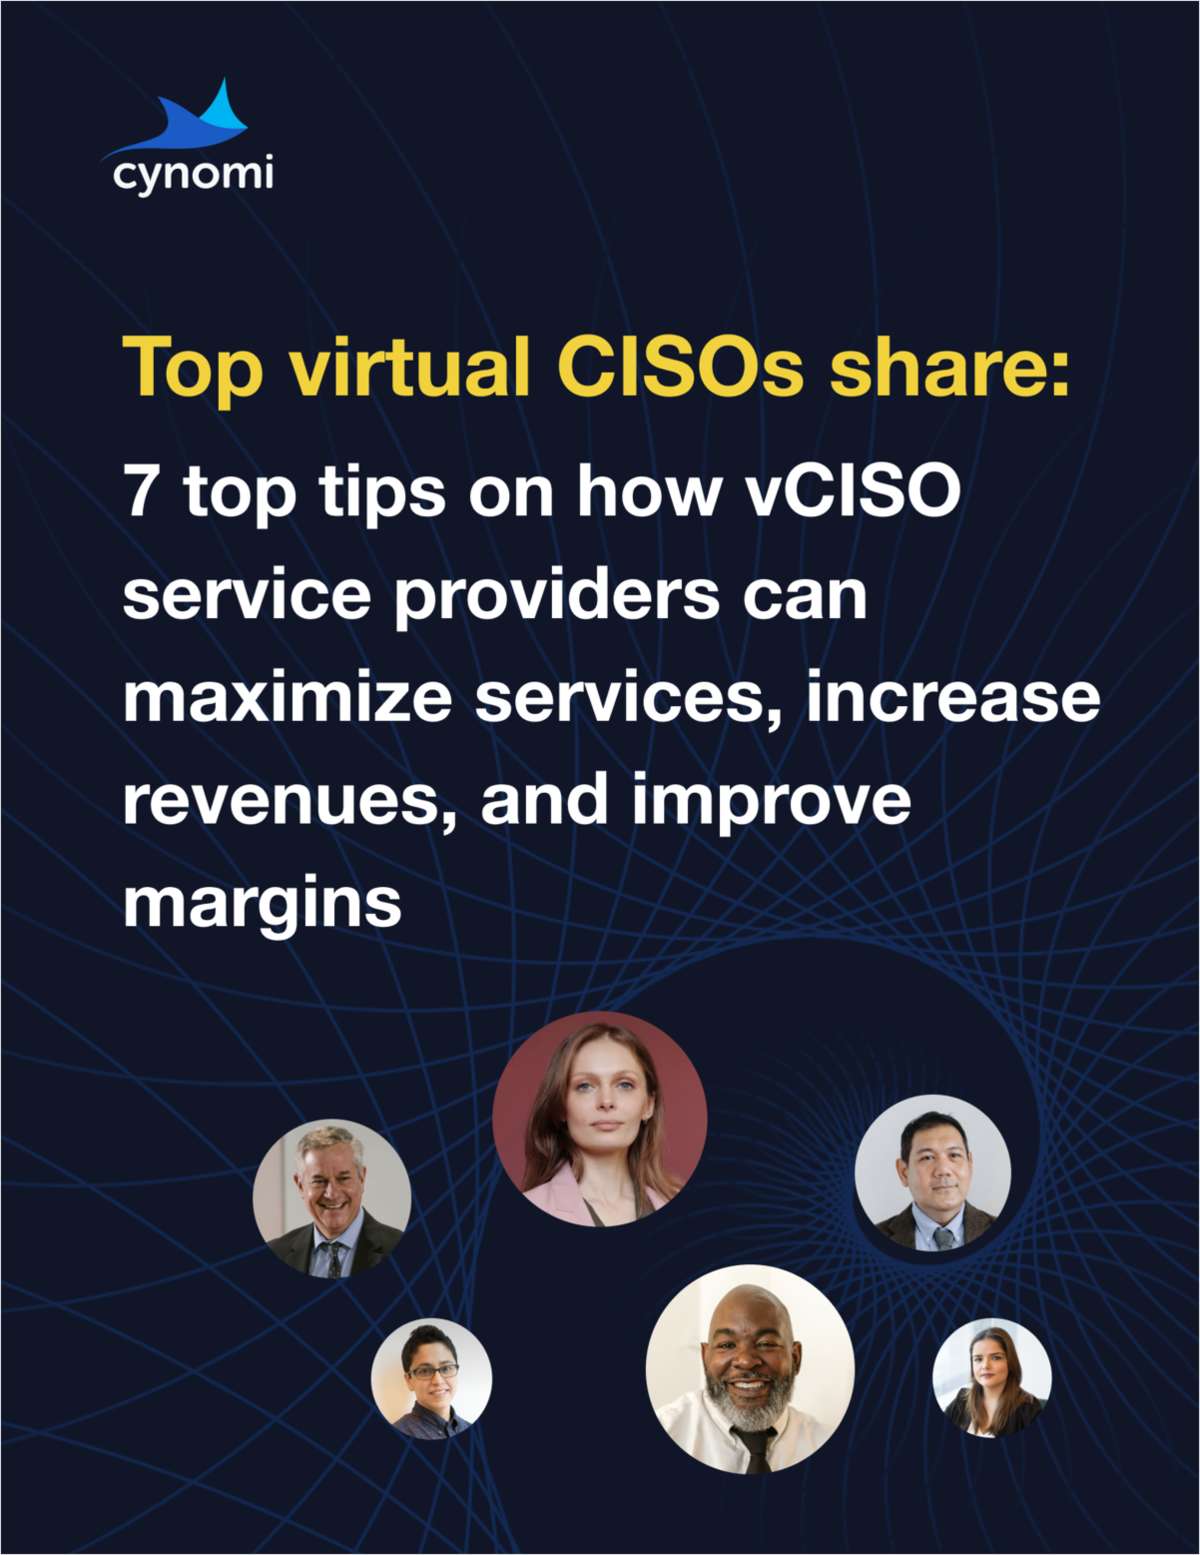 7 tips from top virtual CISOs